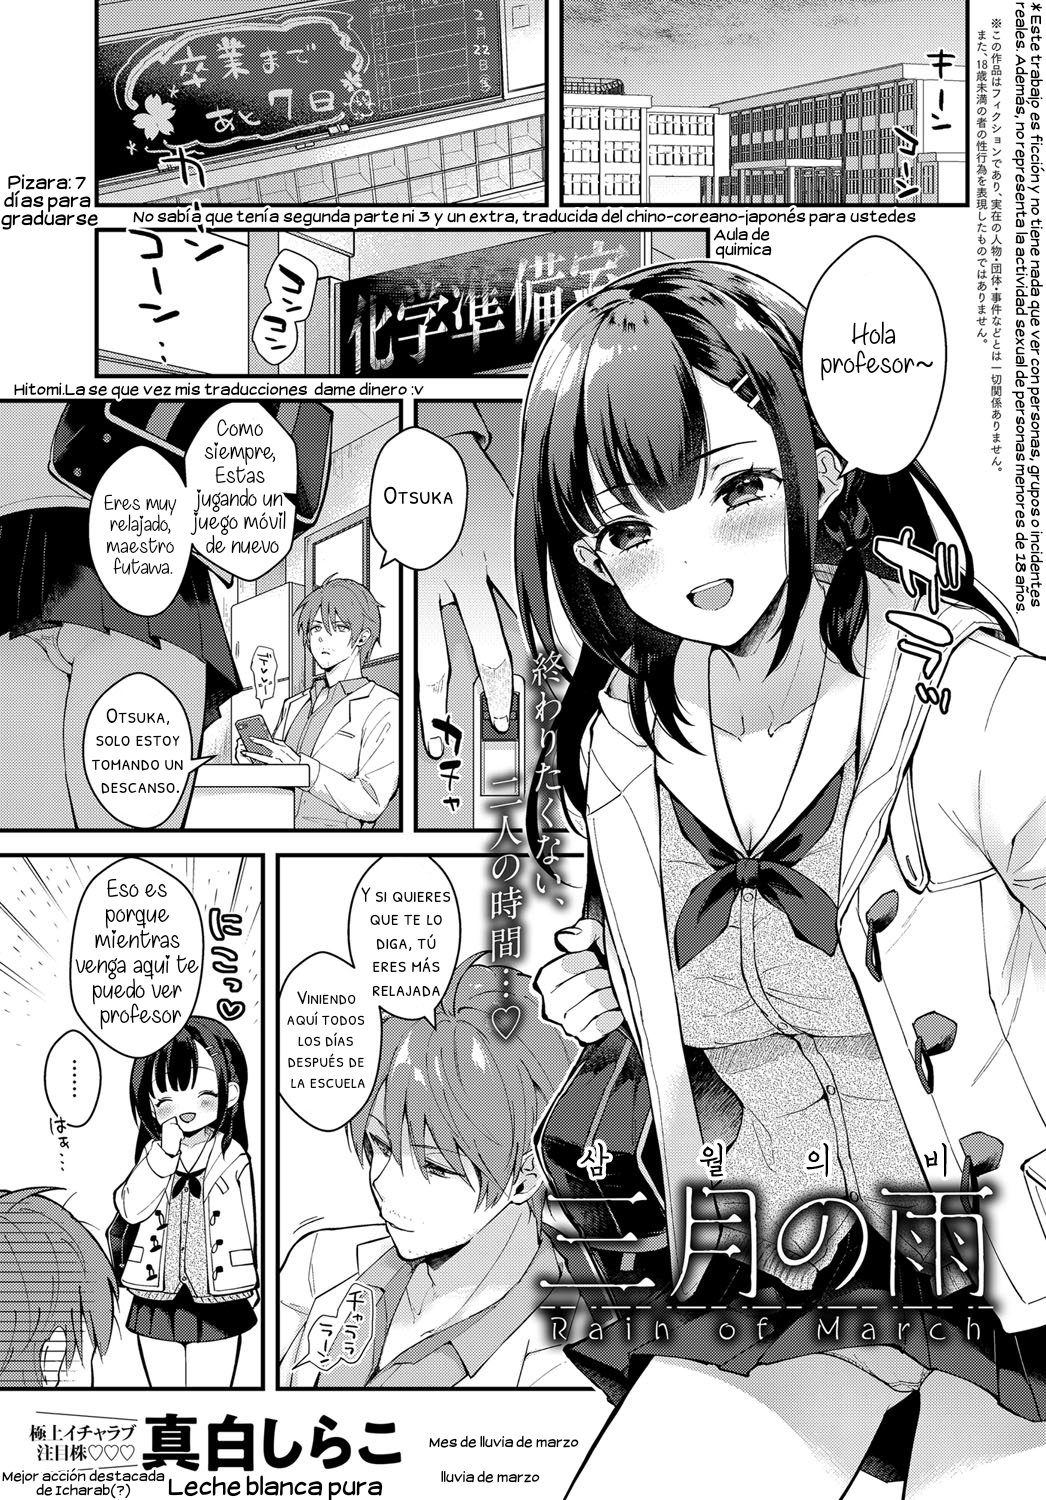 Sangatsu no Ame - Rain of March- JK Miyako no Valentine Manga cap 2 - 0